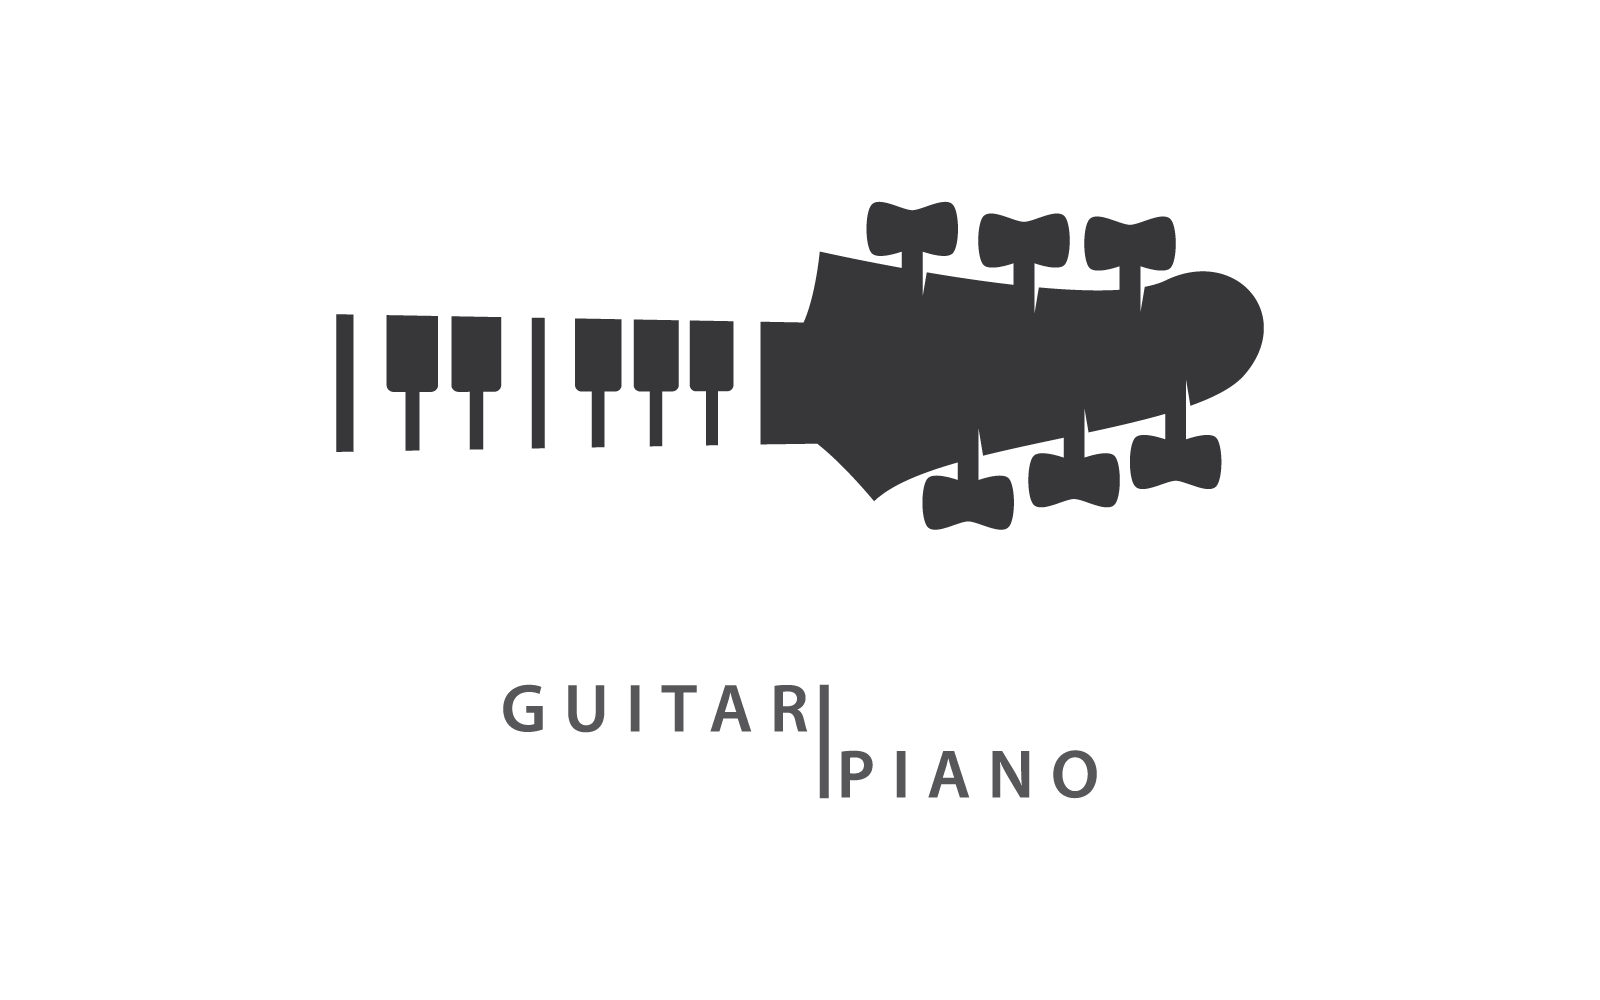 Guitar and Piano logo vector illustration flat design template